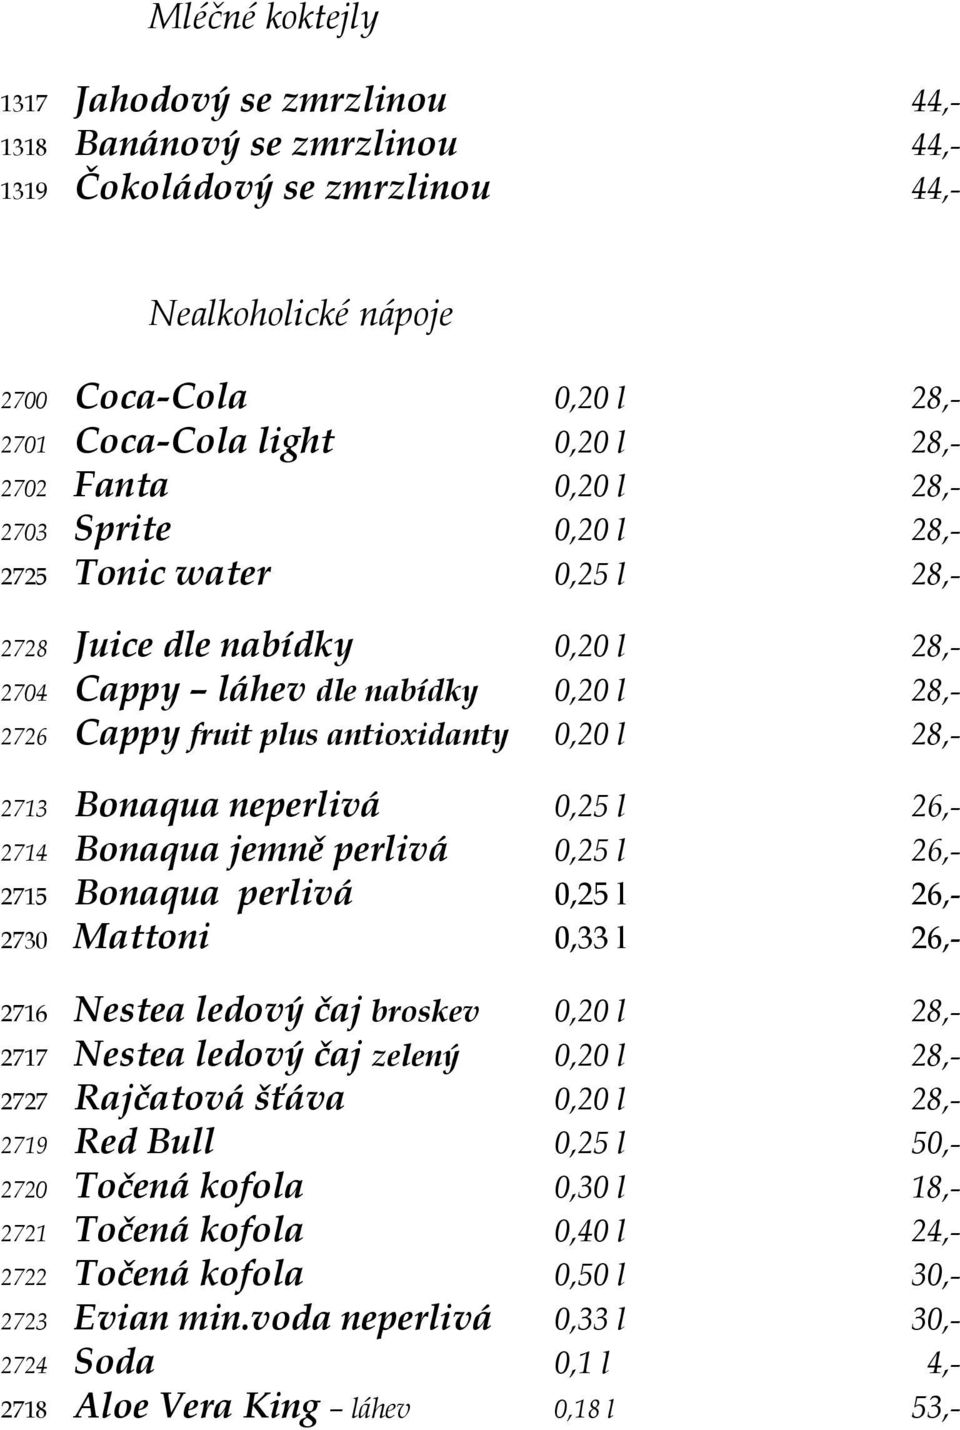 Bonaqua neperlivá 0,25 l 26,- 2714 Bonaqua jemně perlivá 0,25 l 26,- 2715 Bonaqua perlivá 0,25 l 26,- 2730 Mattoni 0,33 l 26,- 2716 Nestea ledový čaj broskev 0,20 l 28,- 2717 Nestea ledový čaj zelený